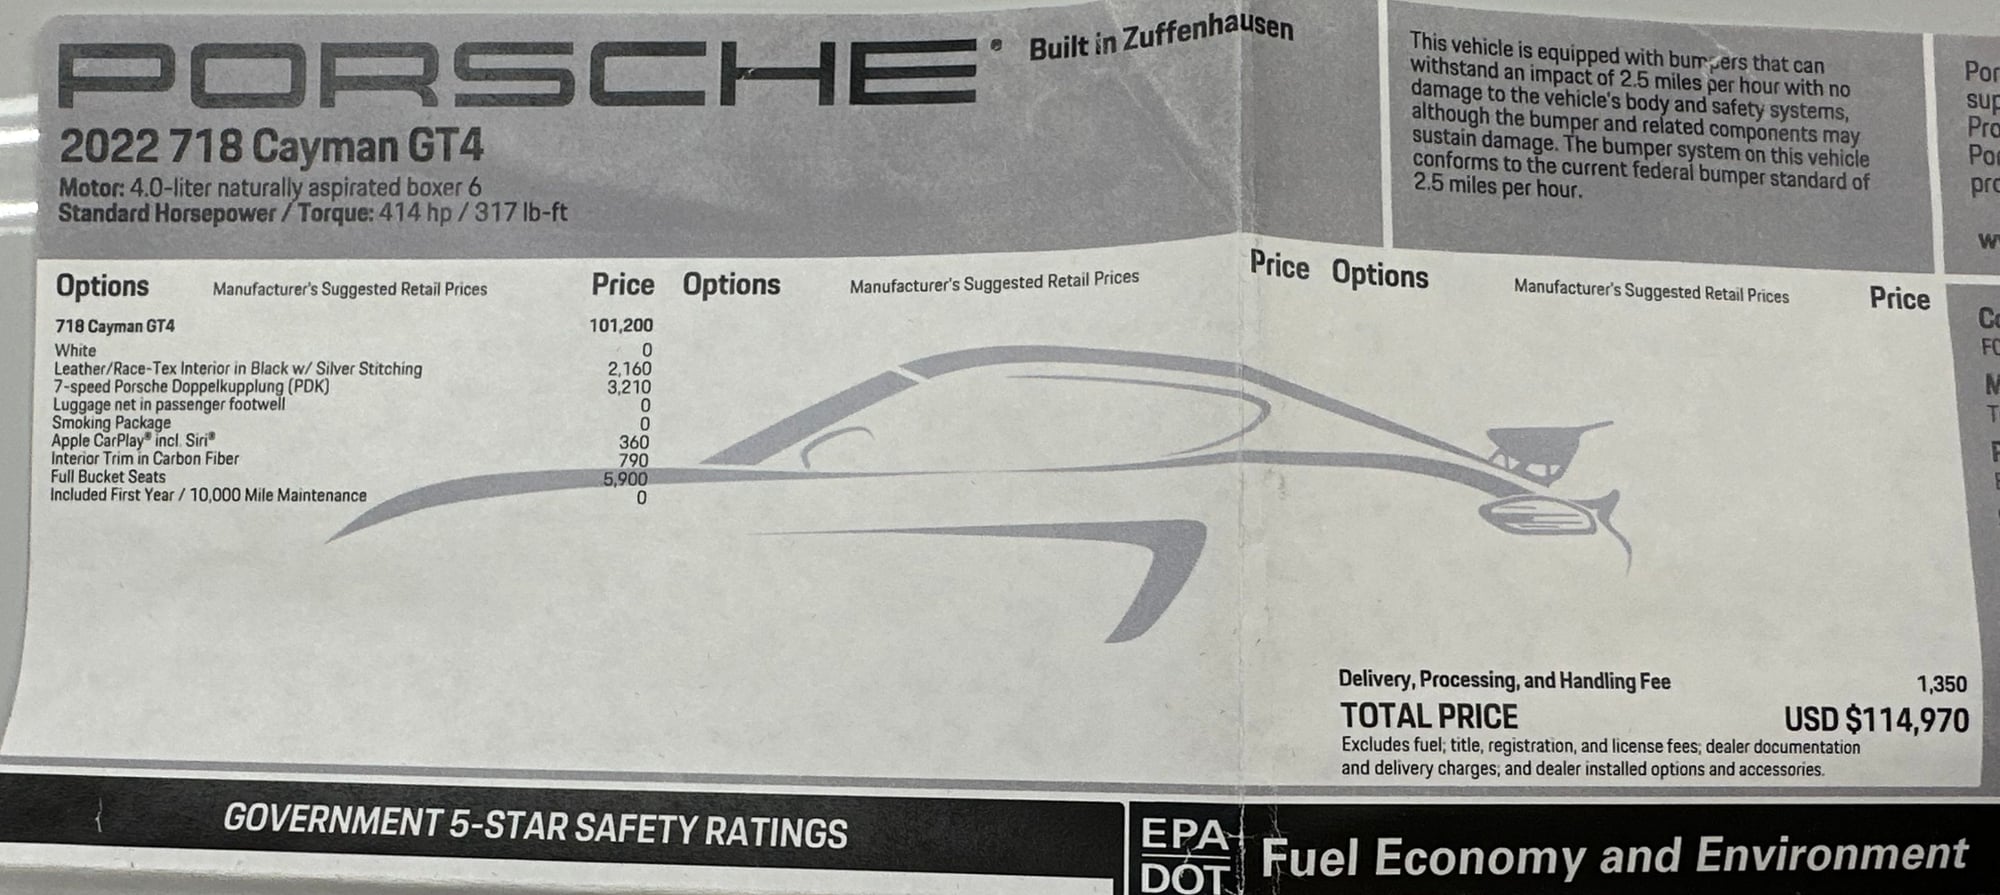 2022 Porsche 718 - 2022 718 GT4 - PDK, LWBS, Full Leather, Carbon Fiber Trim, Carplay - Used - VIN WP0AC2A83NS275336 - 3,988 Miles - Automatic - Conshohocken, PA 19428, United States